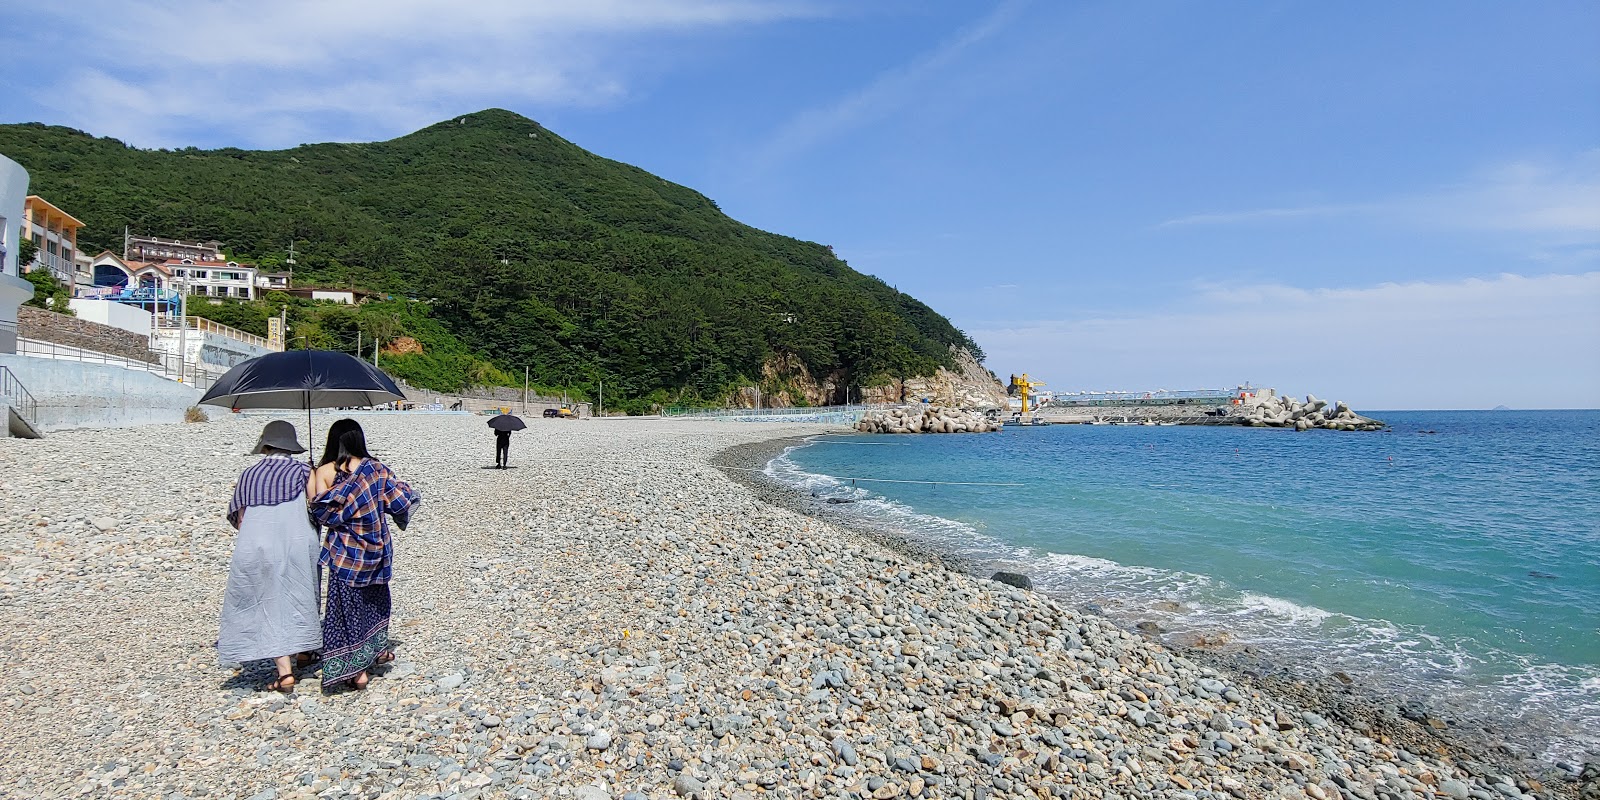 Photo of Yeocha Beach with gray pebble surface